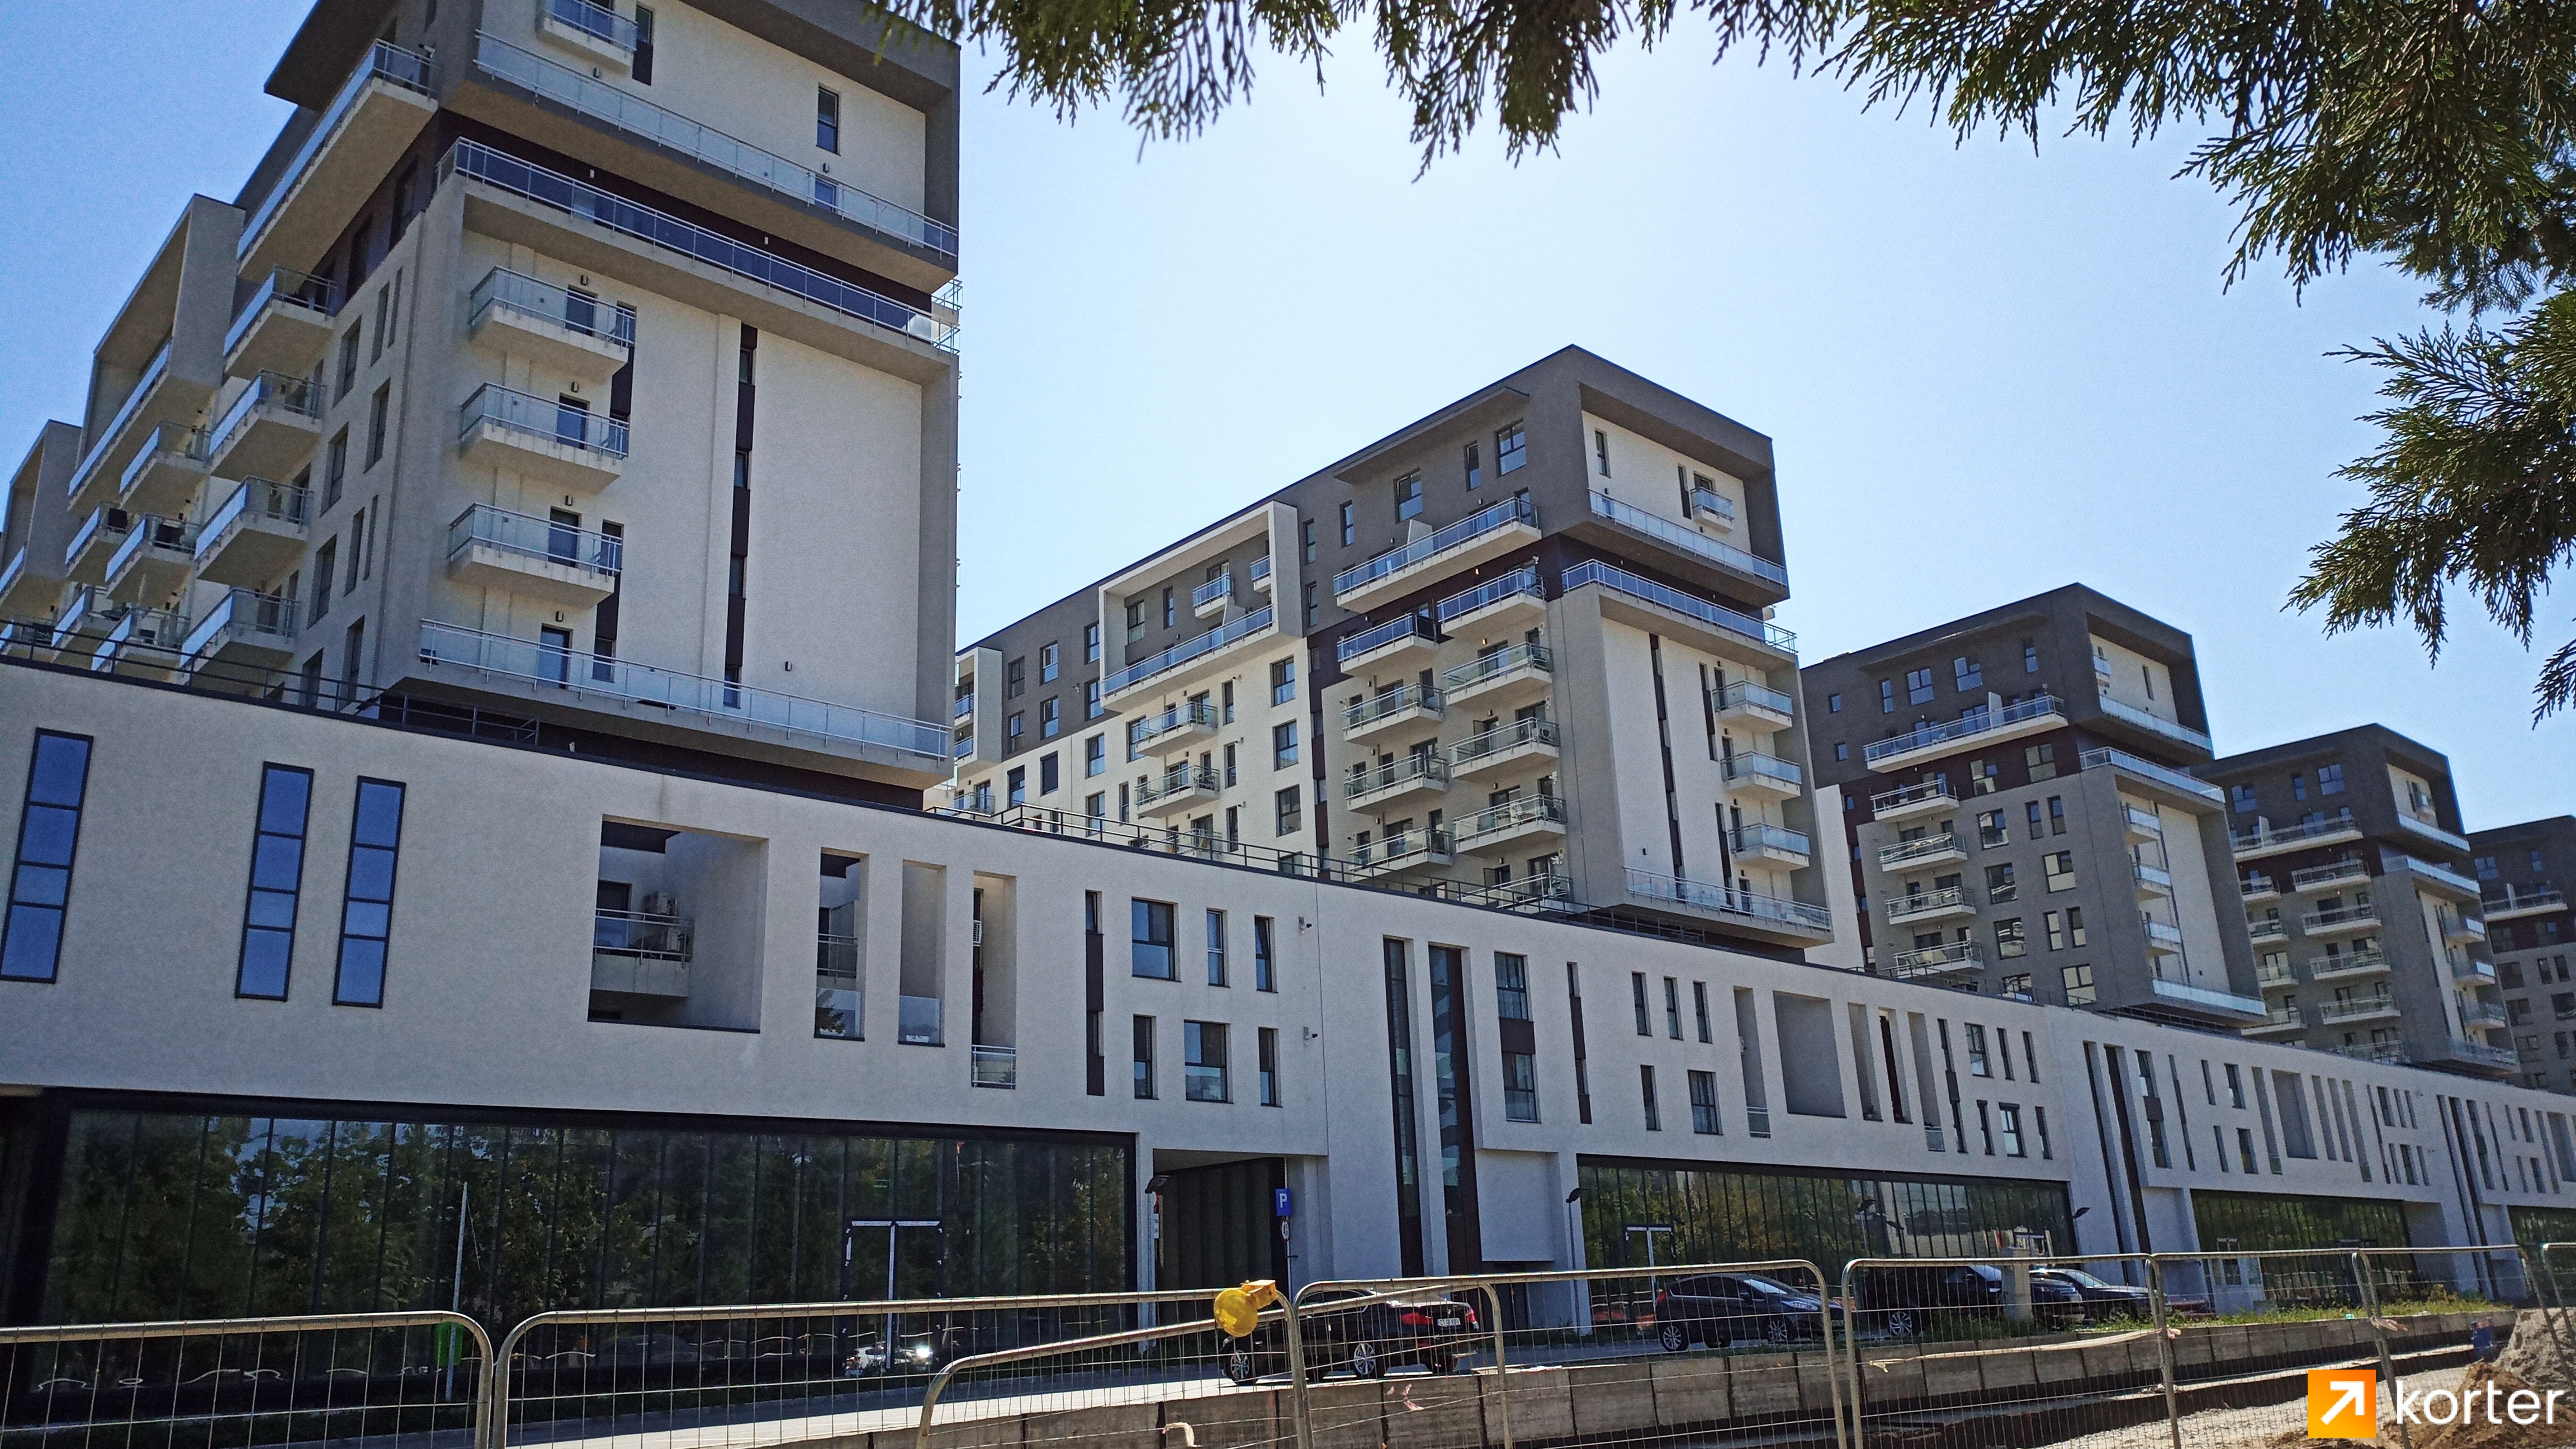 Evoluția construcției Complexului Belvedere Residences - Punct 3, August 2019